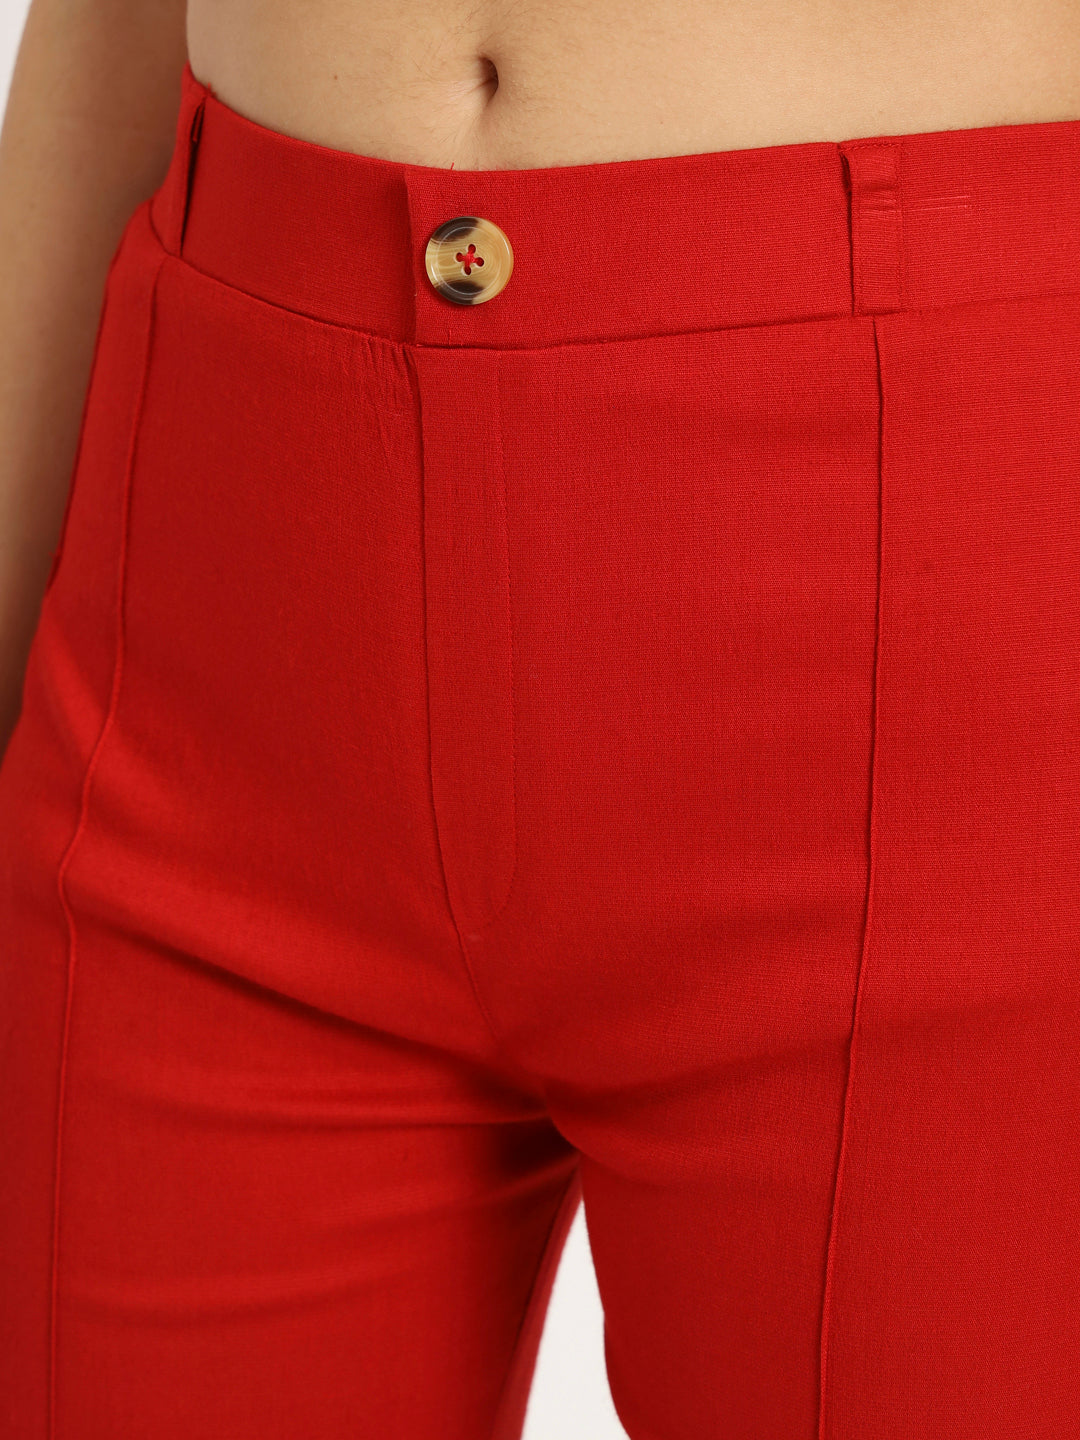 Lava Red Bell Bottom Pants